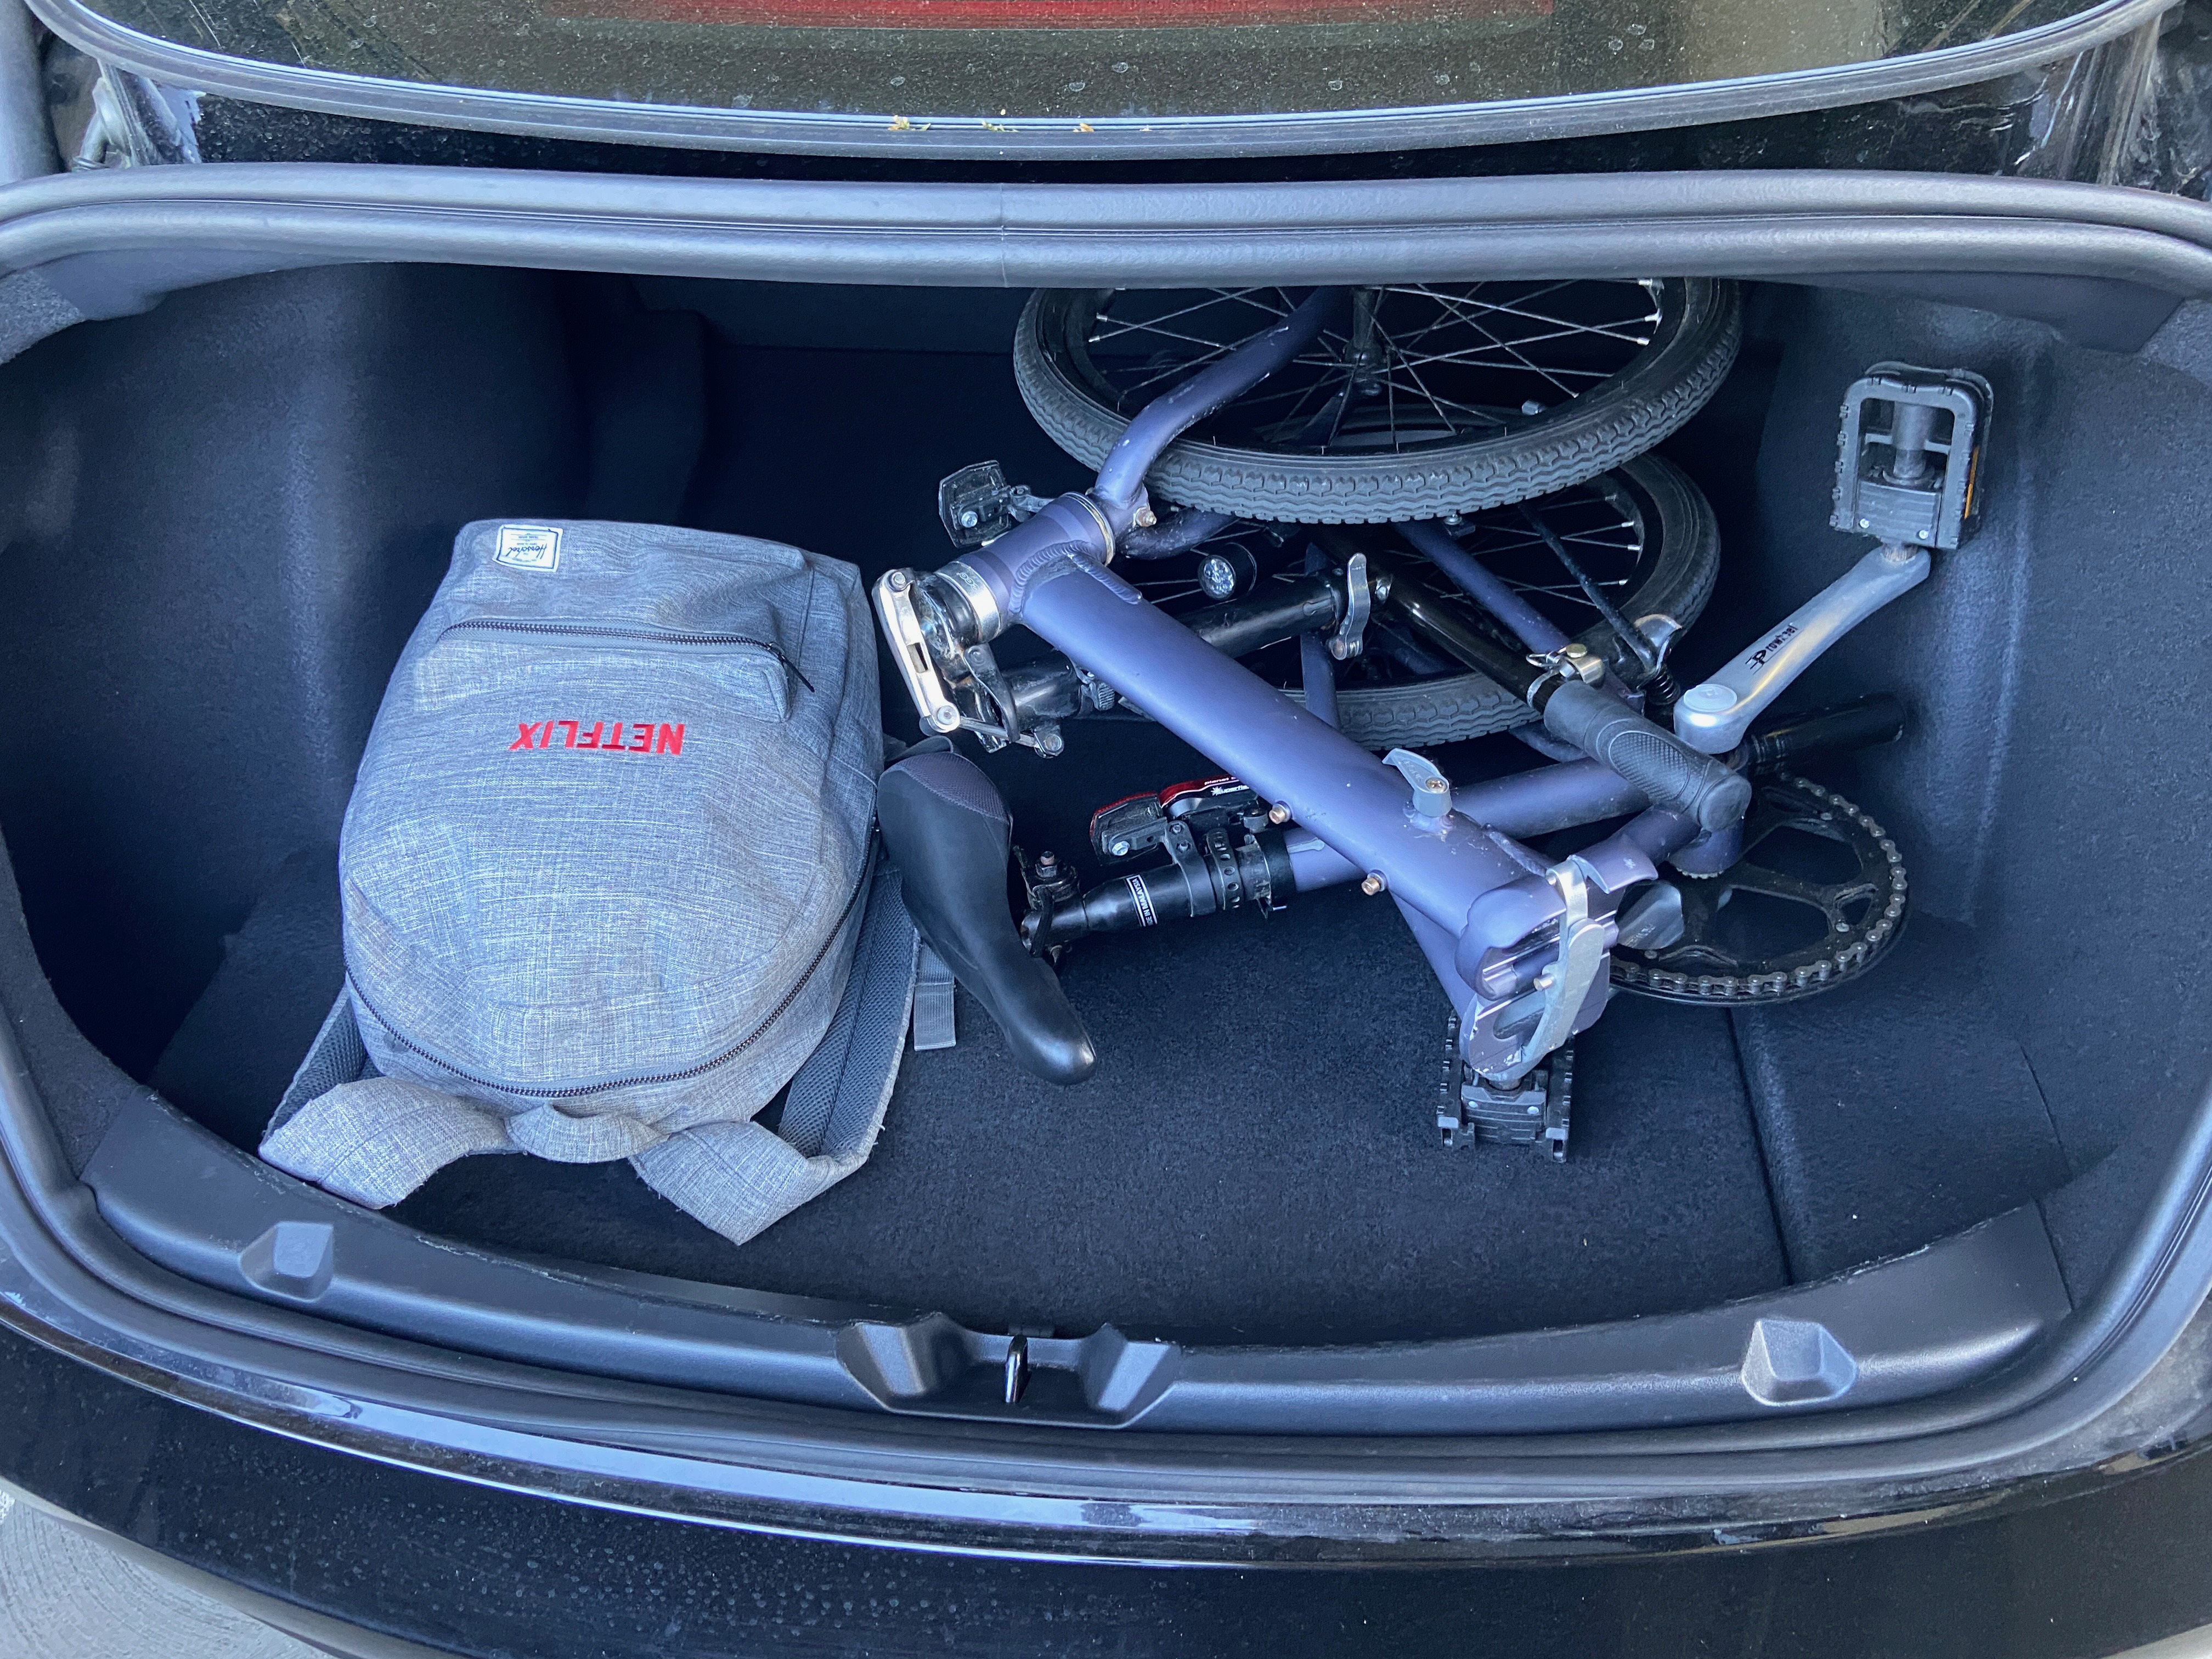 Folding bike & backpack in the trunk of a Tesla Model 3